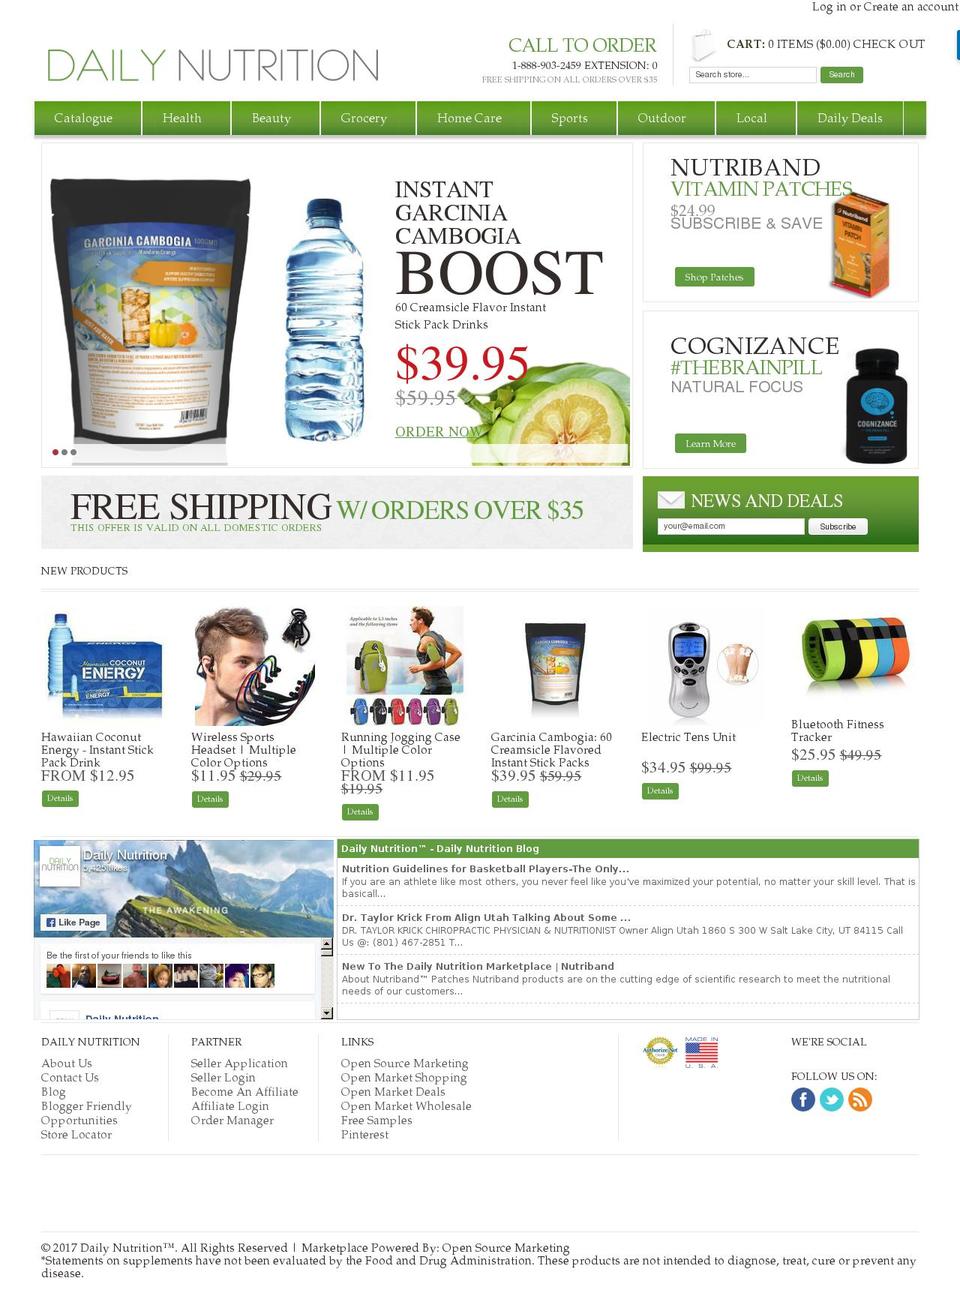 dailynutritionshopping.com shopify website screenshot